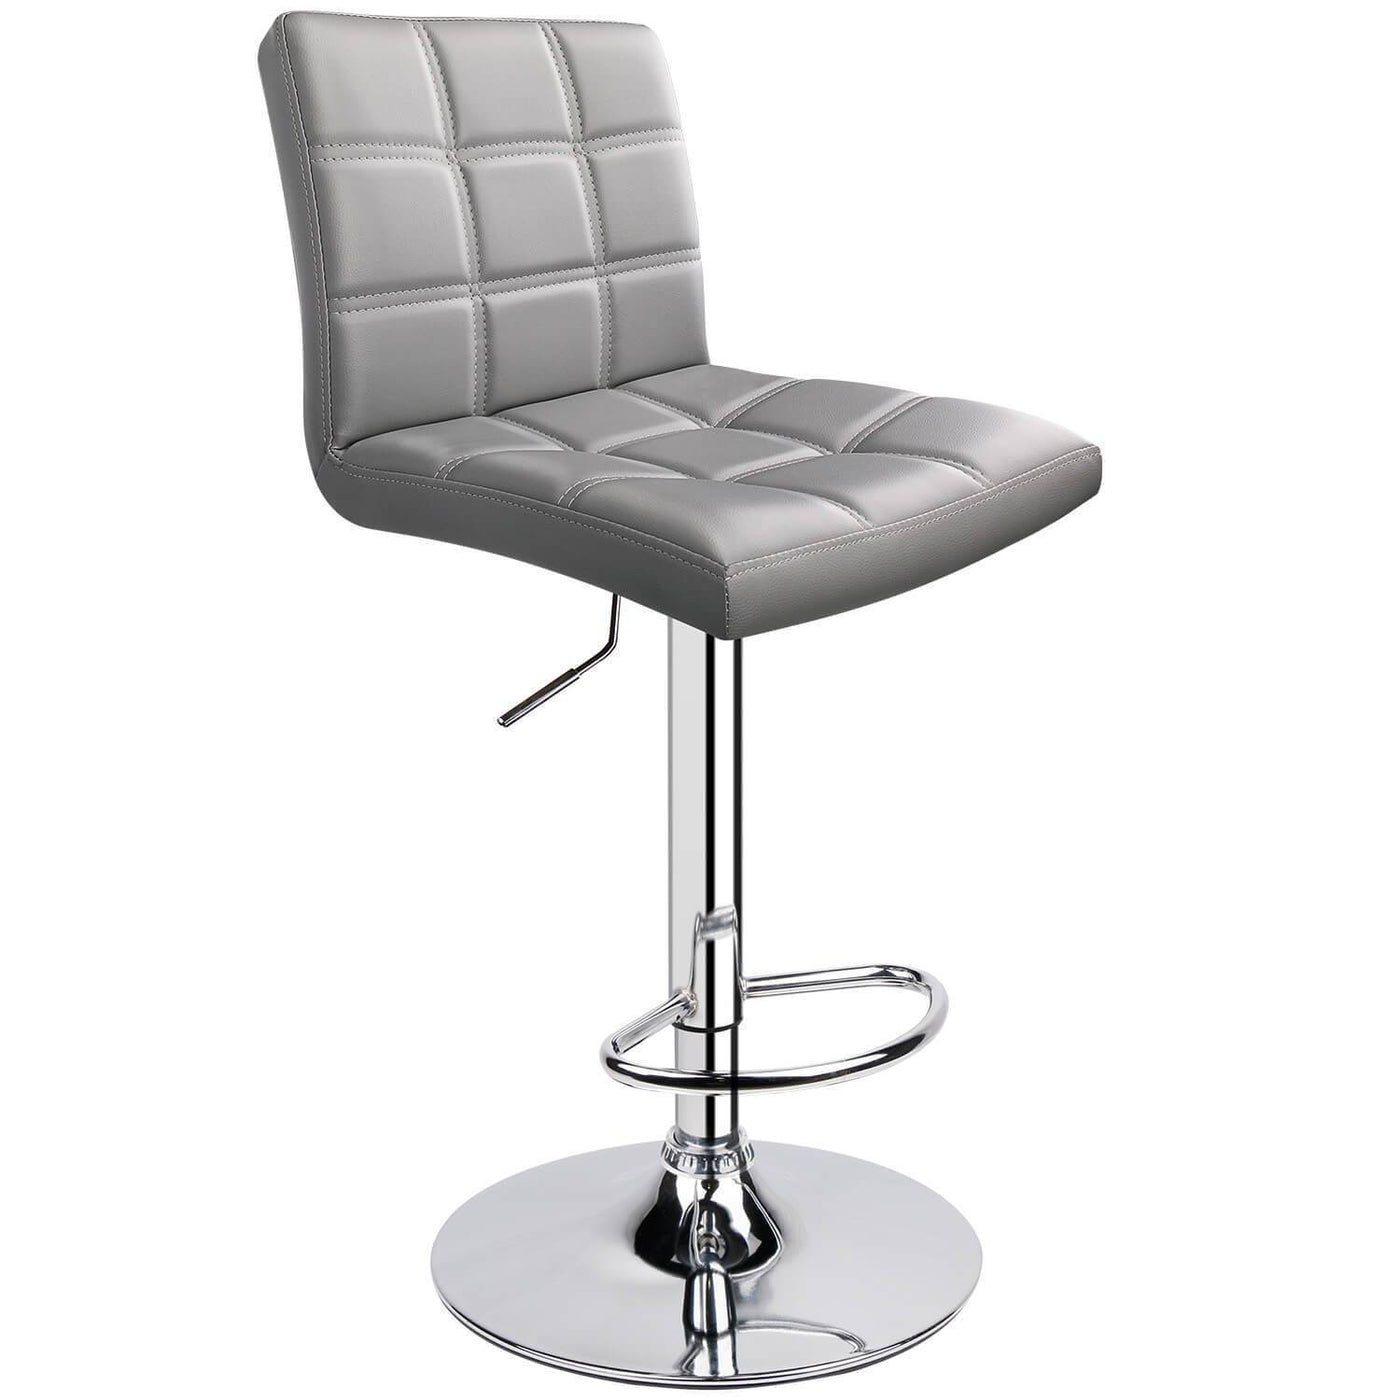 PU Leather Square Adjustable Swivel Bar Stool Black (1 Chair)